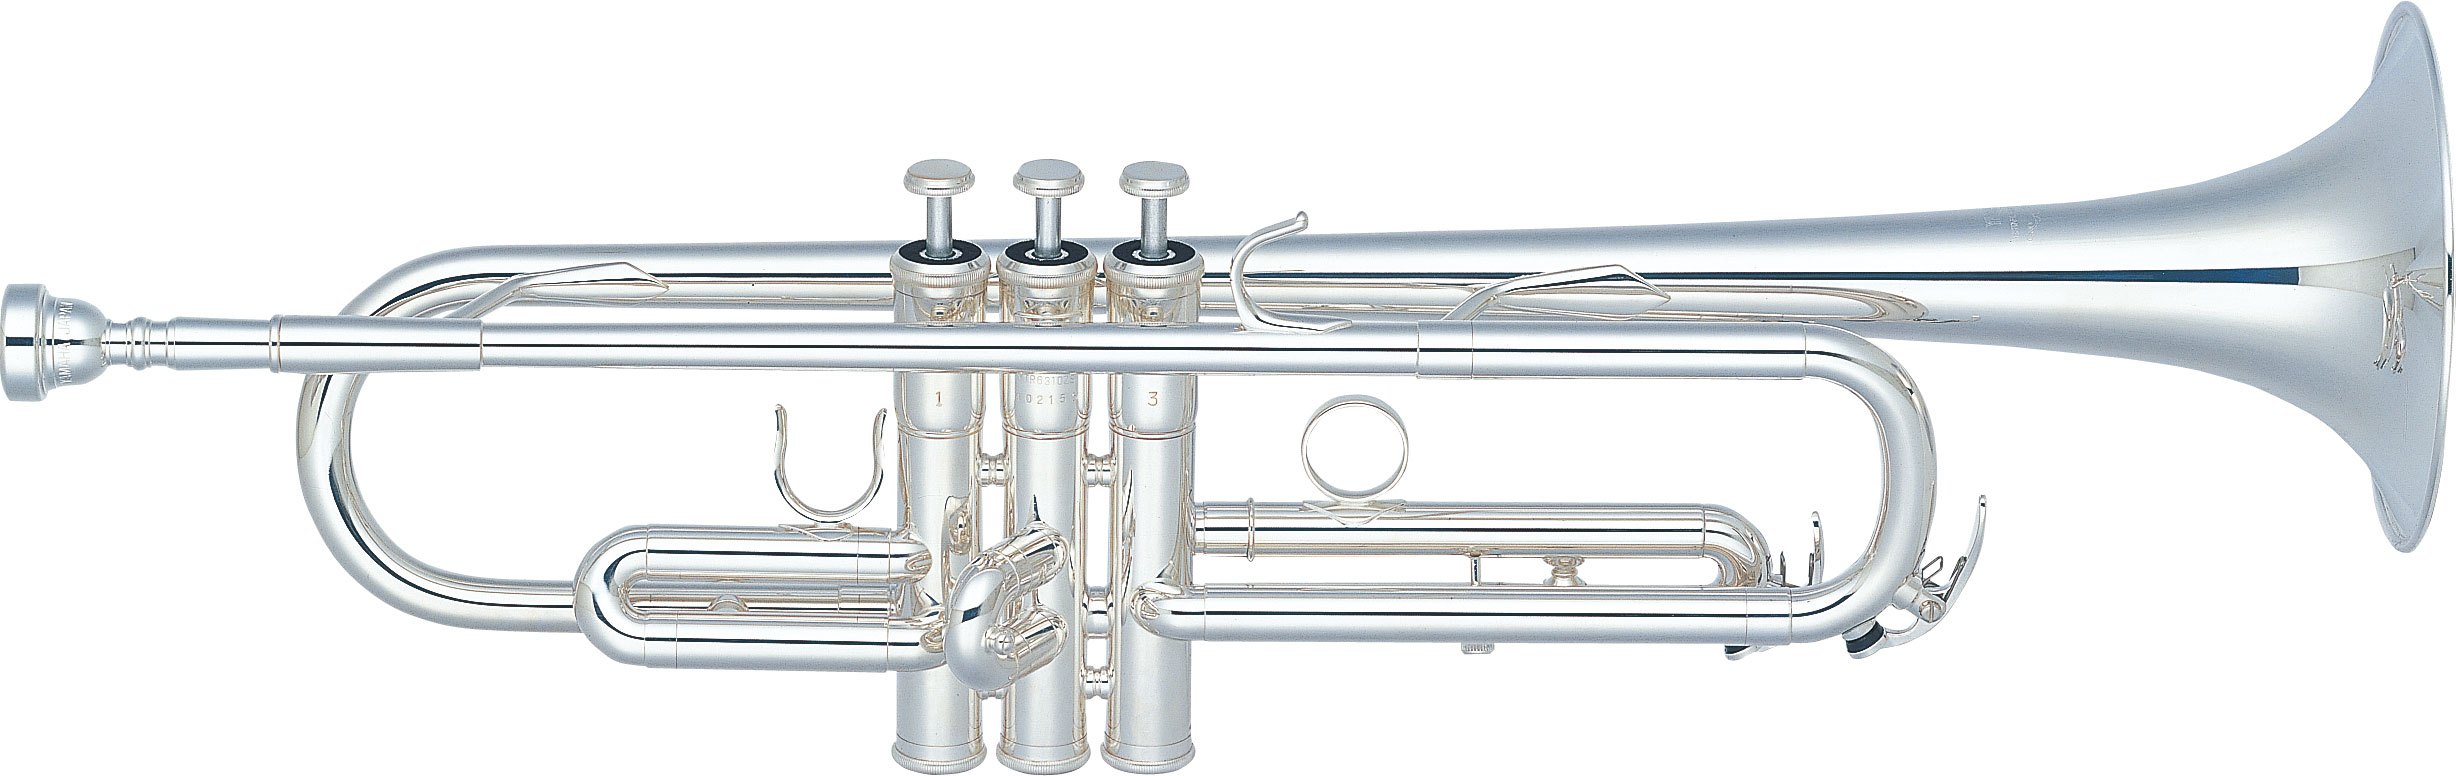 YTR-6310Z - Overview - Bb Trumpets - Trumpets - Brass & Woodwinds 